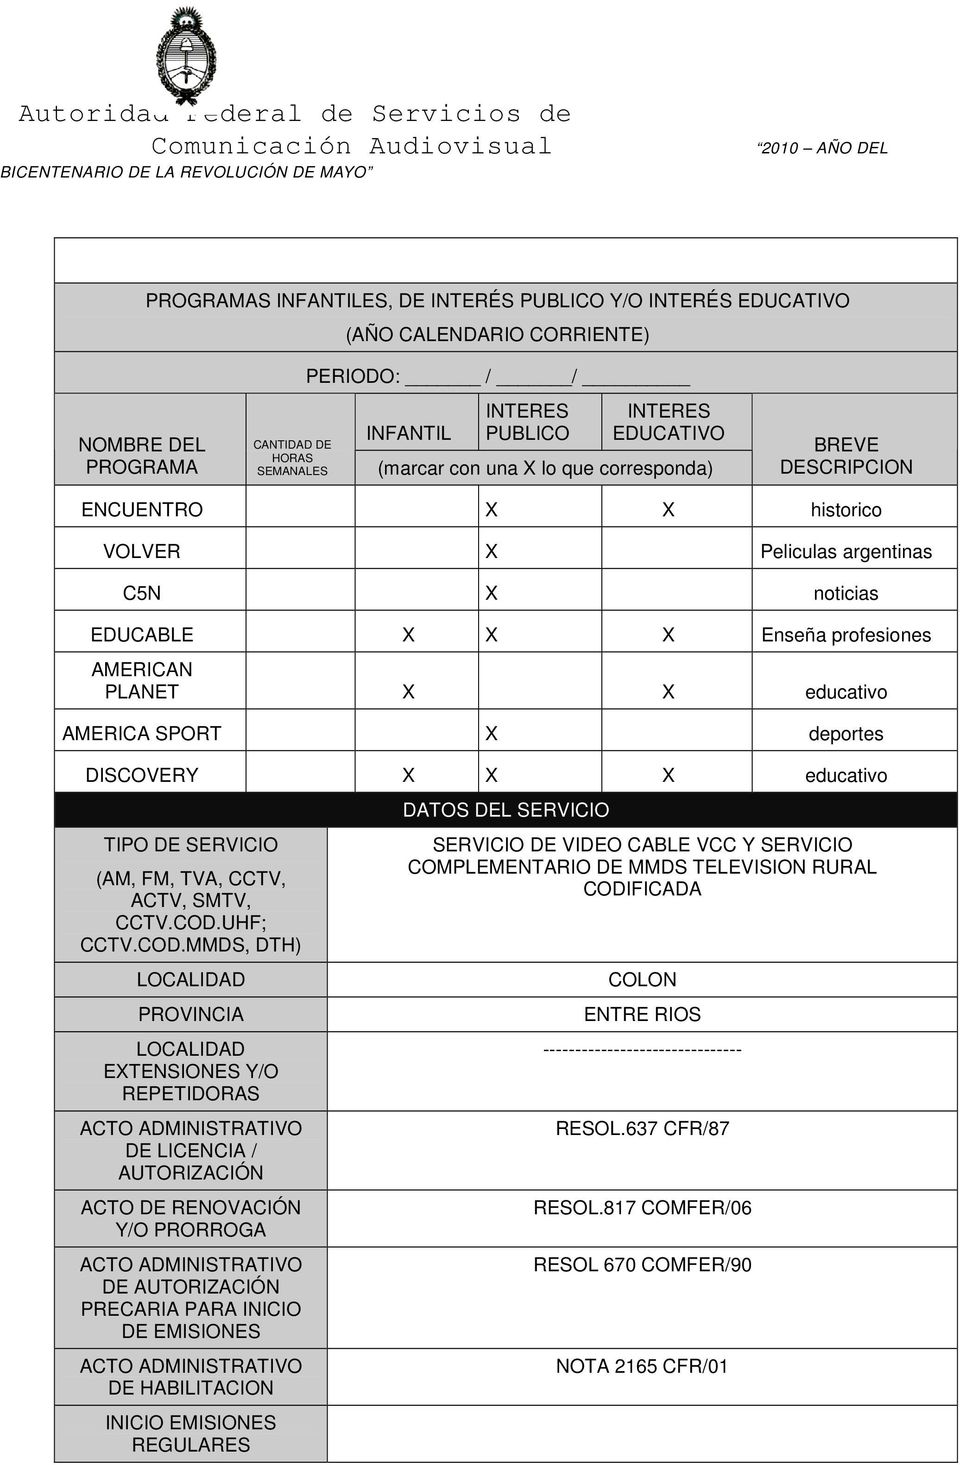 SPORT X deportes DISCOVERY X X X educativo TIPO DE SERVICIO (AM, FM, TVA, CCTV, ACTV, SMTV, CCTV.COD.